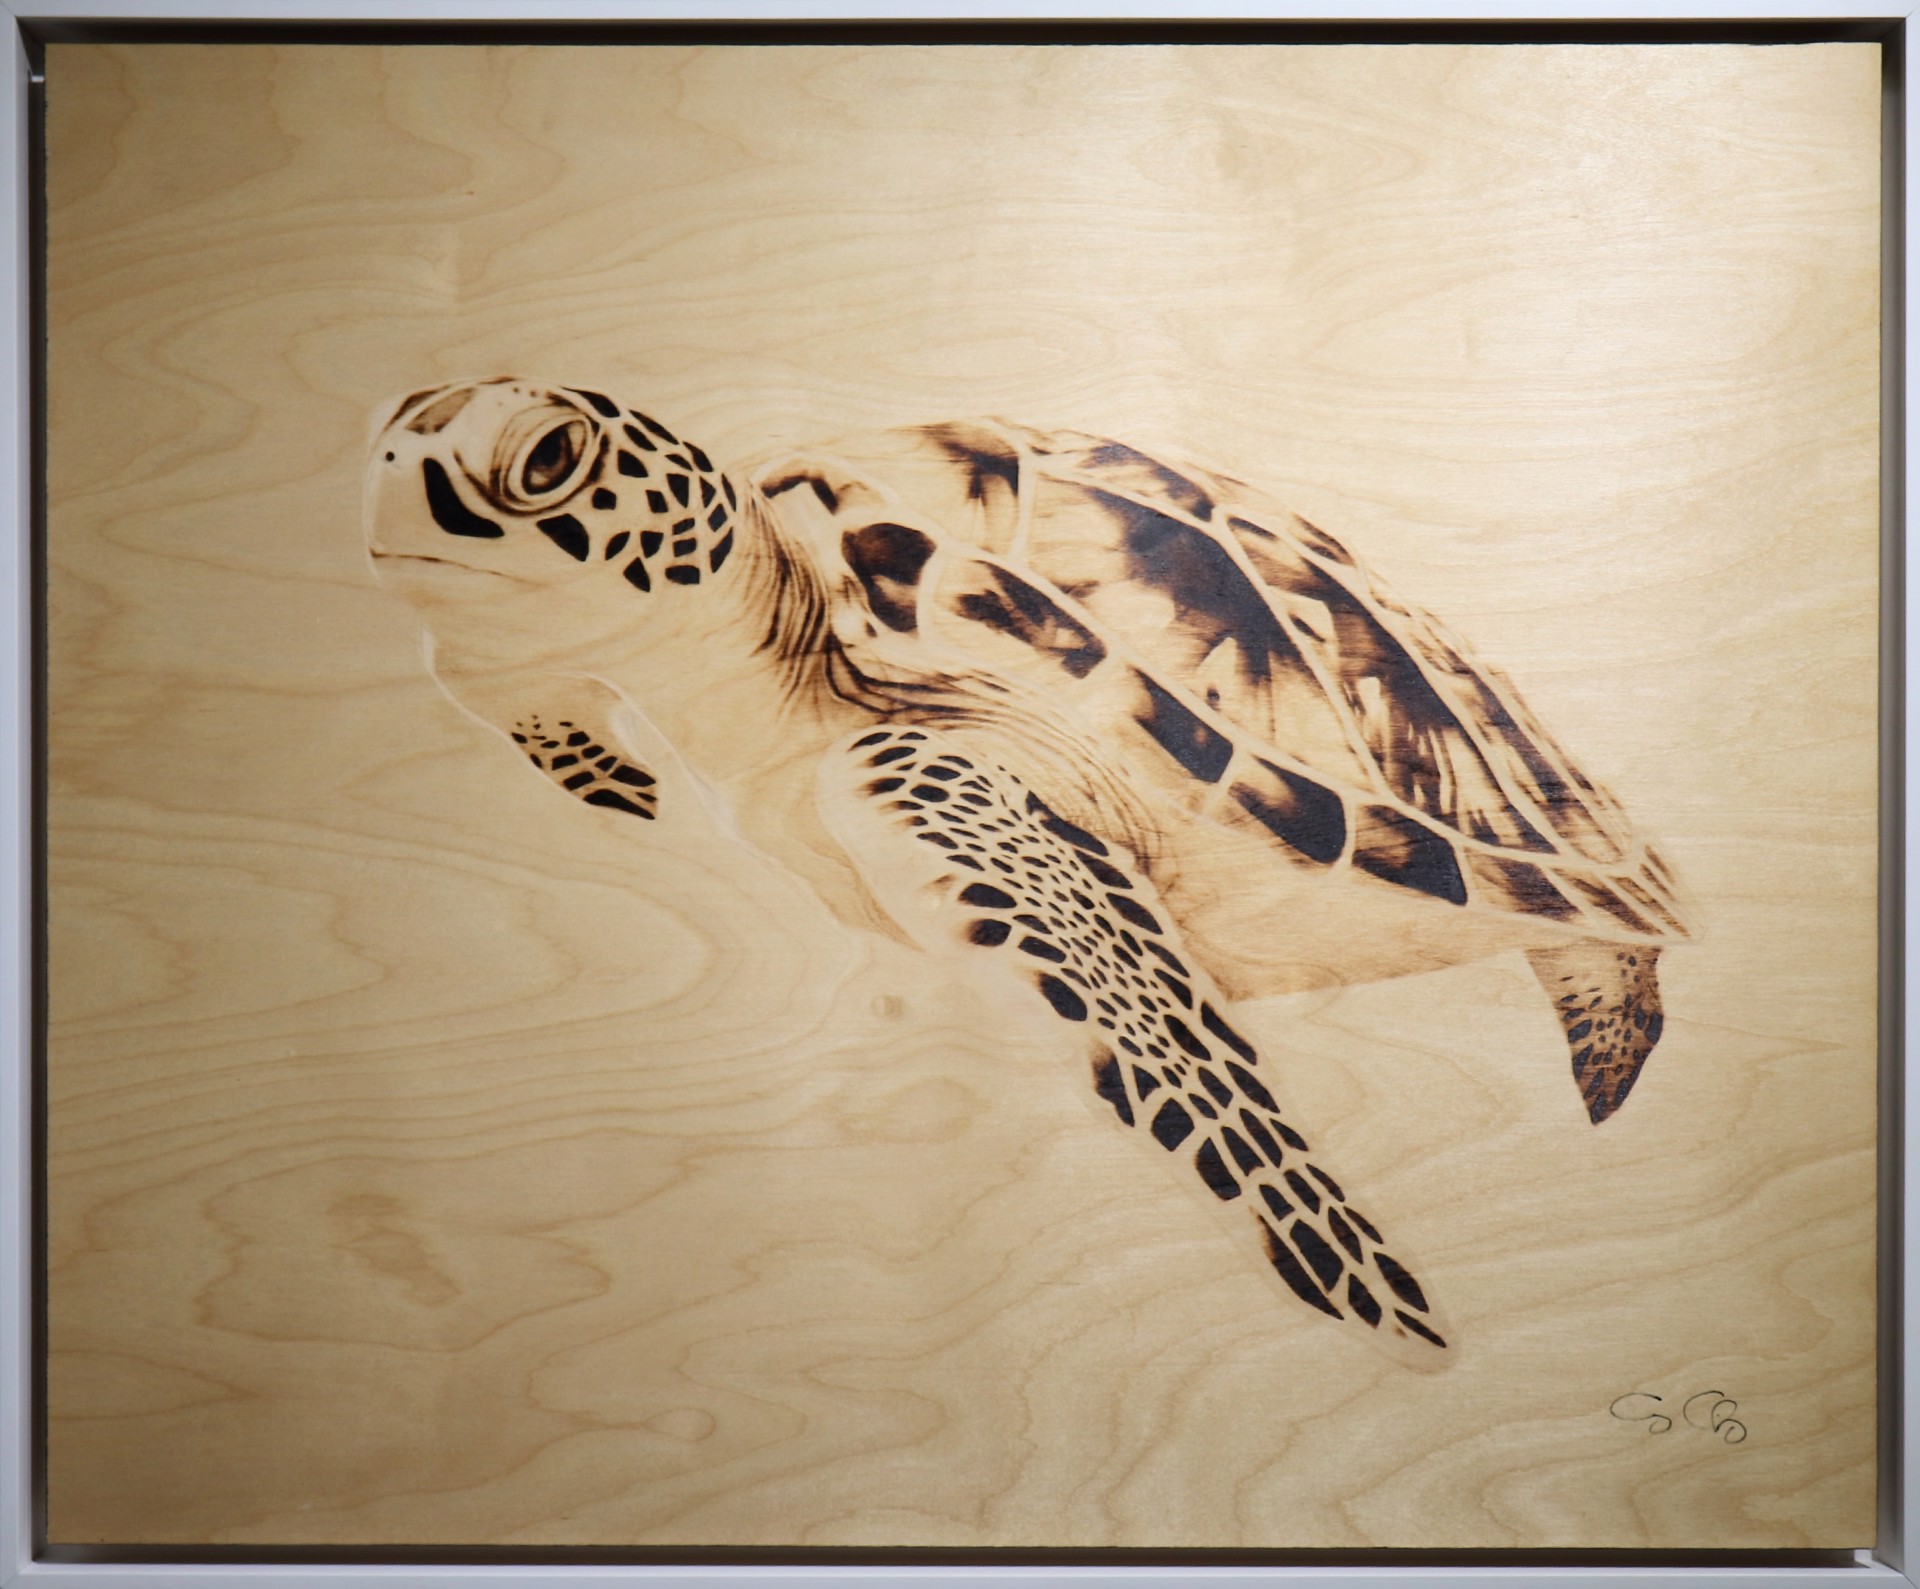 Turtle by George Charriez